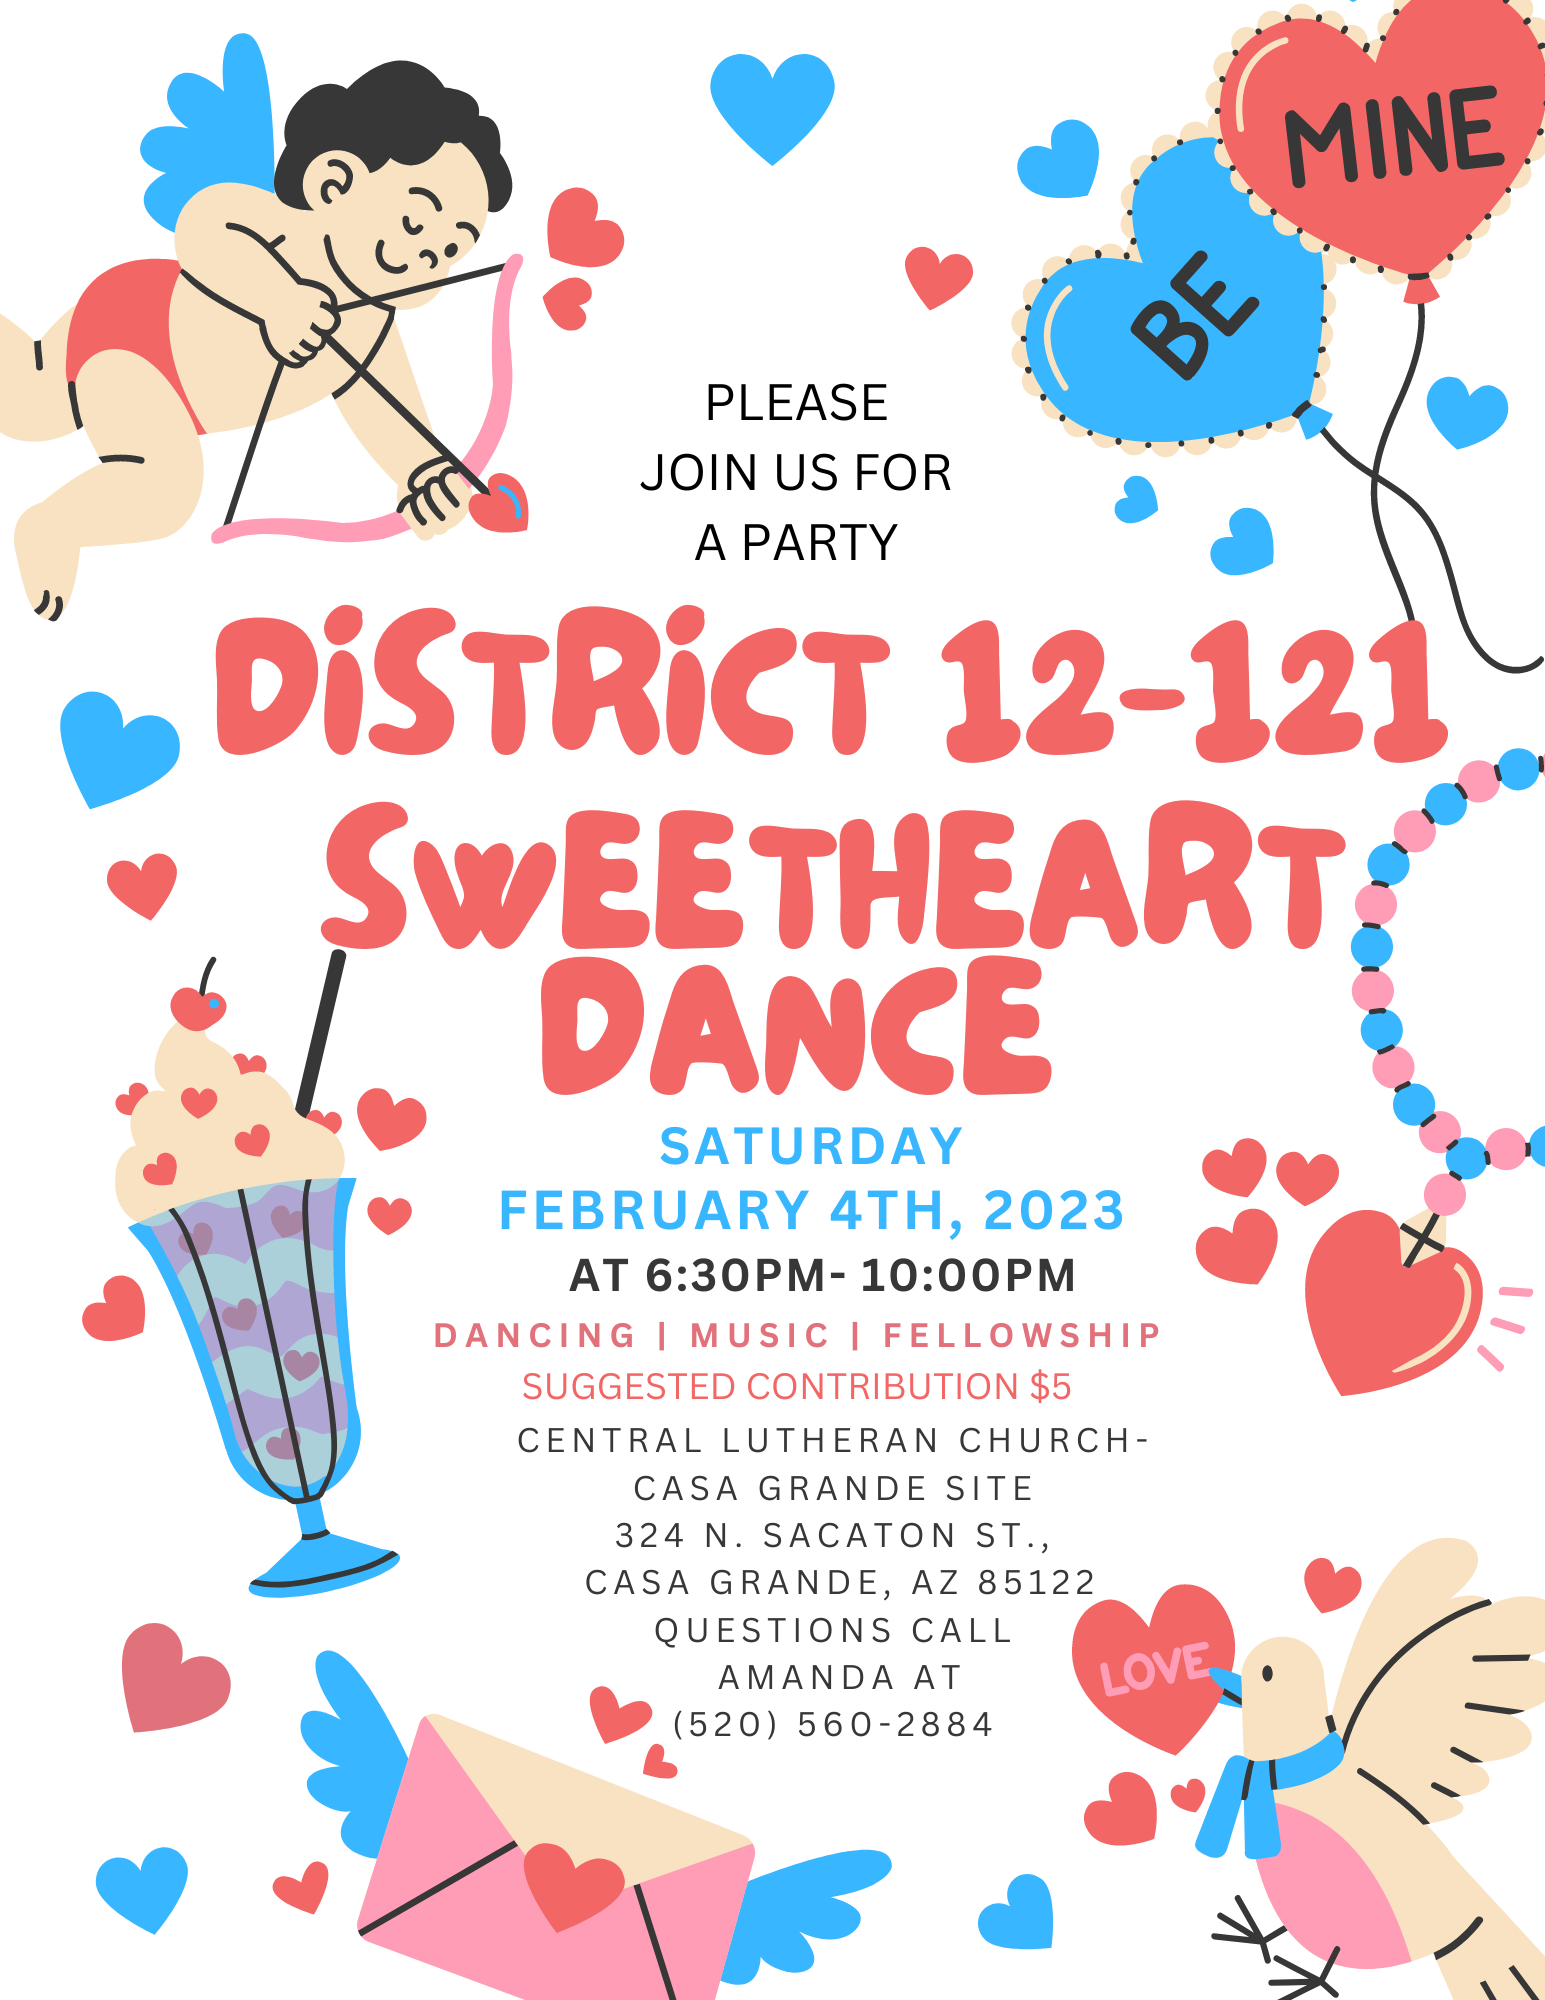 District 12-121 Sweetheart Dance